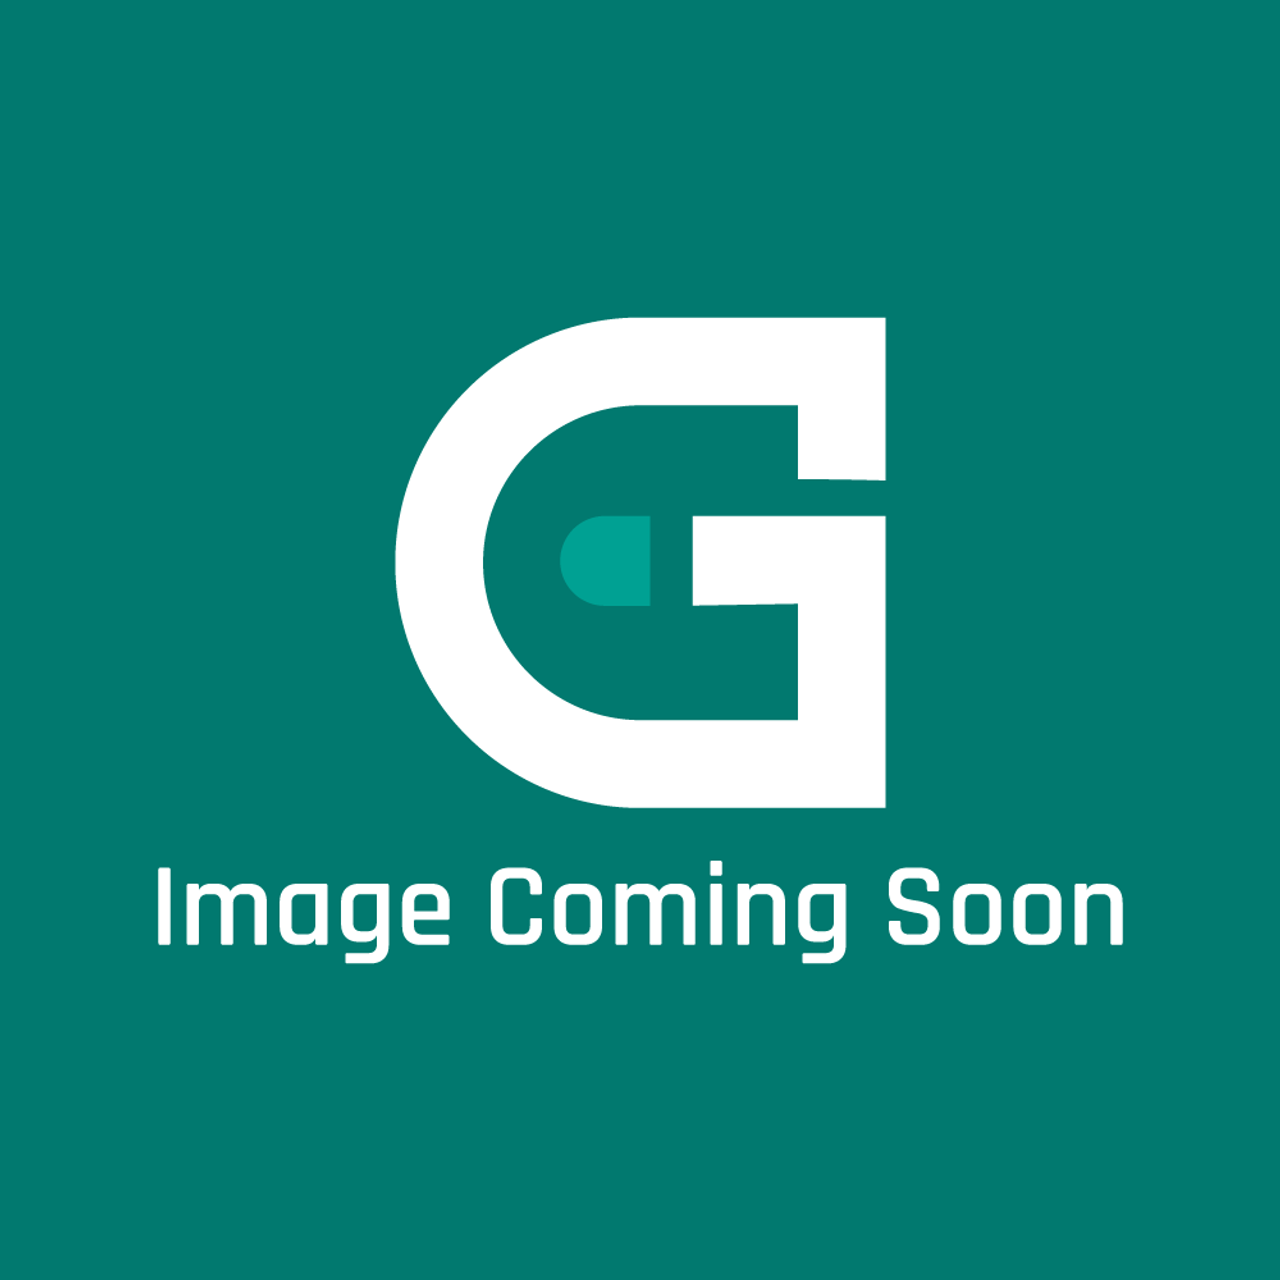 AGA Marvel GG4M37790 - Brkt Target Pilot 0150086 Hl - Image Coming Soon!